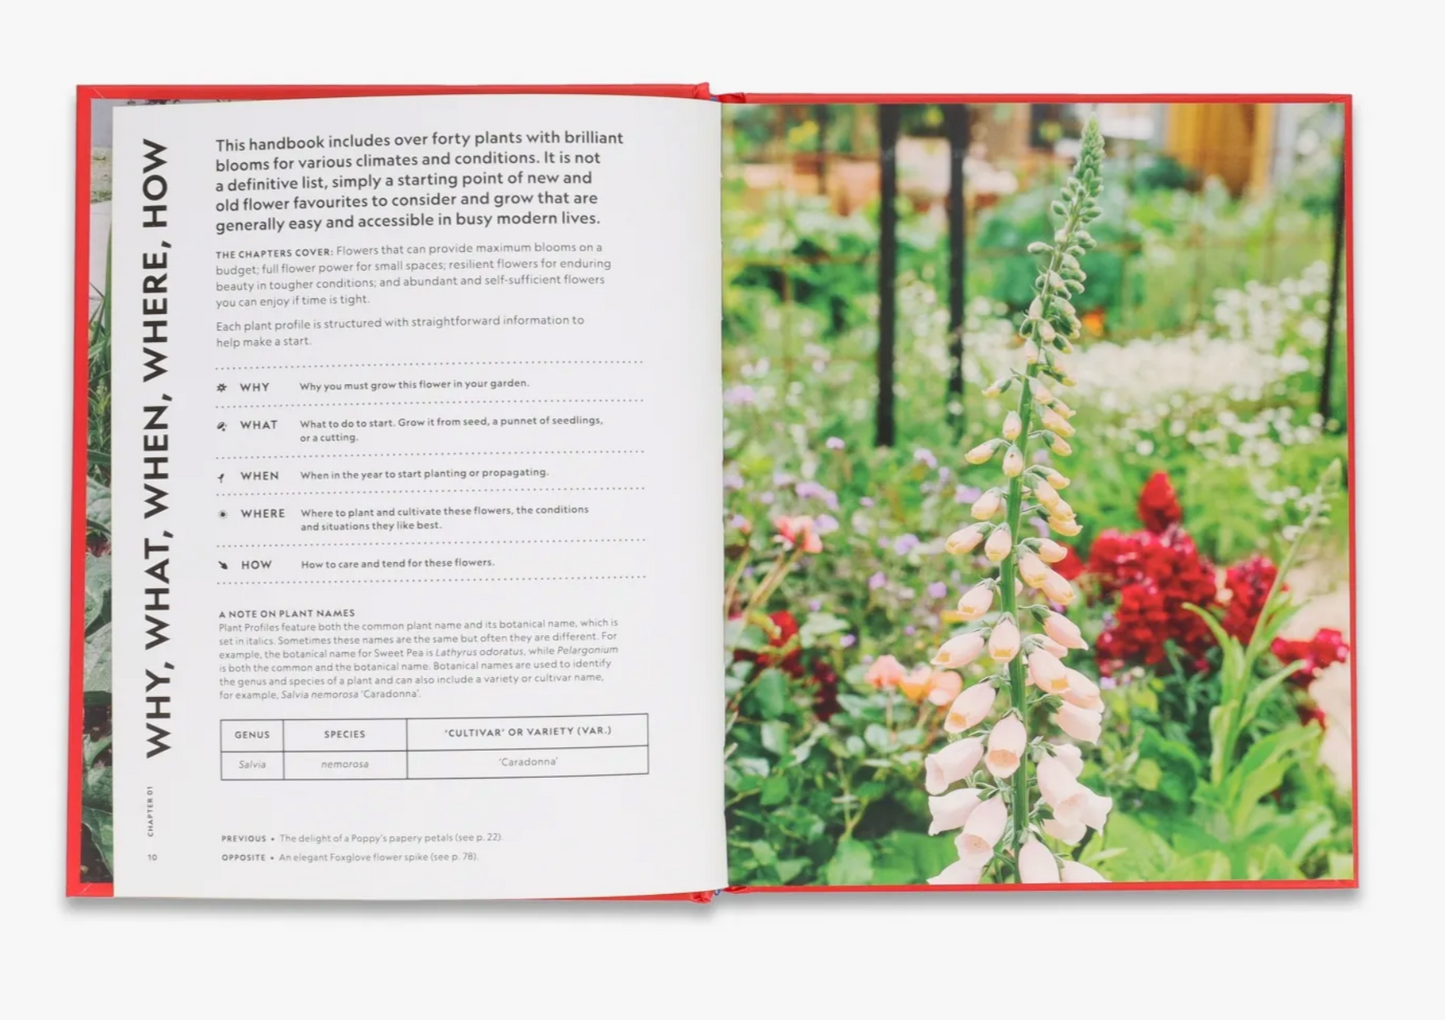 The Super Bloom Handbook by Jac Semmler